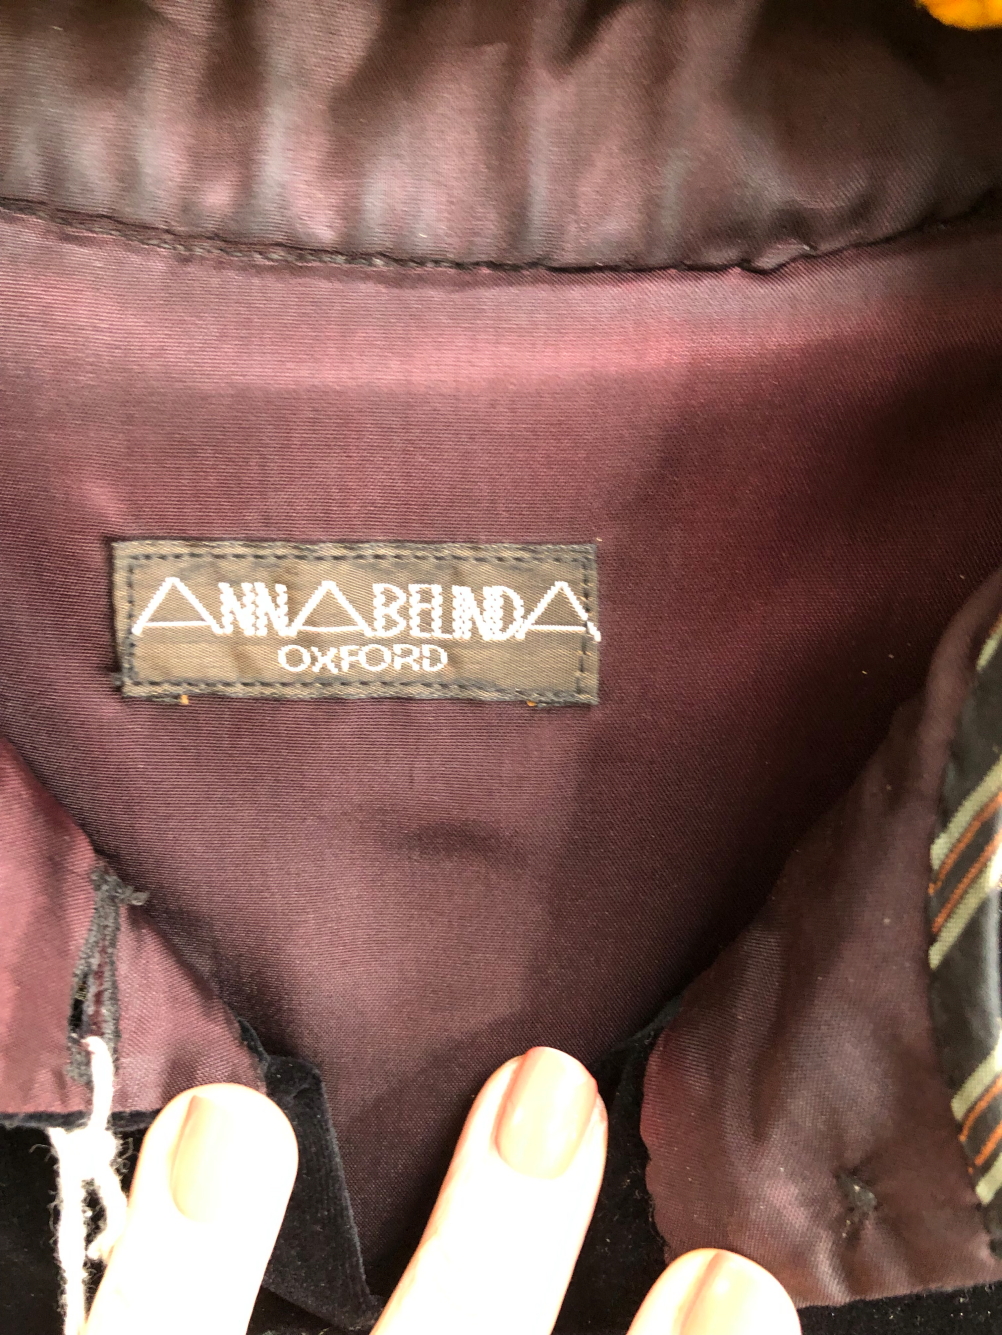 DRESS: ANNA BELINDA, BLACK VELVET, SLEEVE LENGTH 40cms, NECK TO HEM 117cms, ARMPIT TO ARMPIT 42cms. - Image 4 of 6